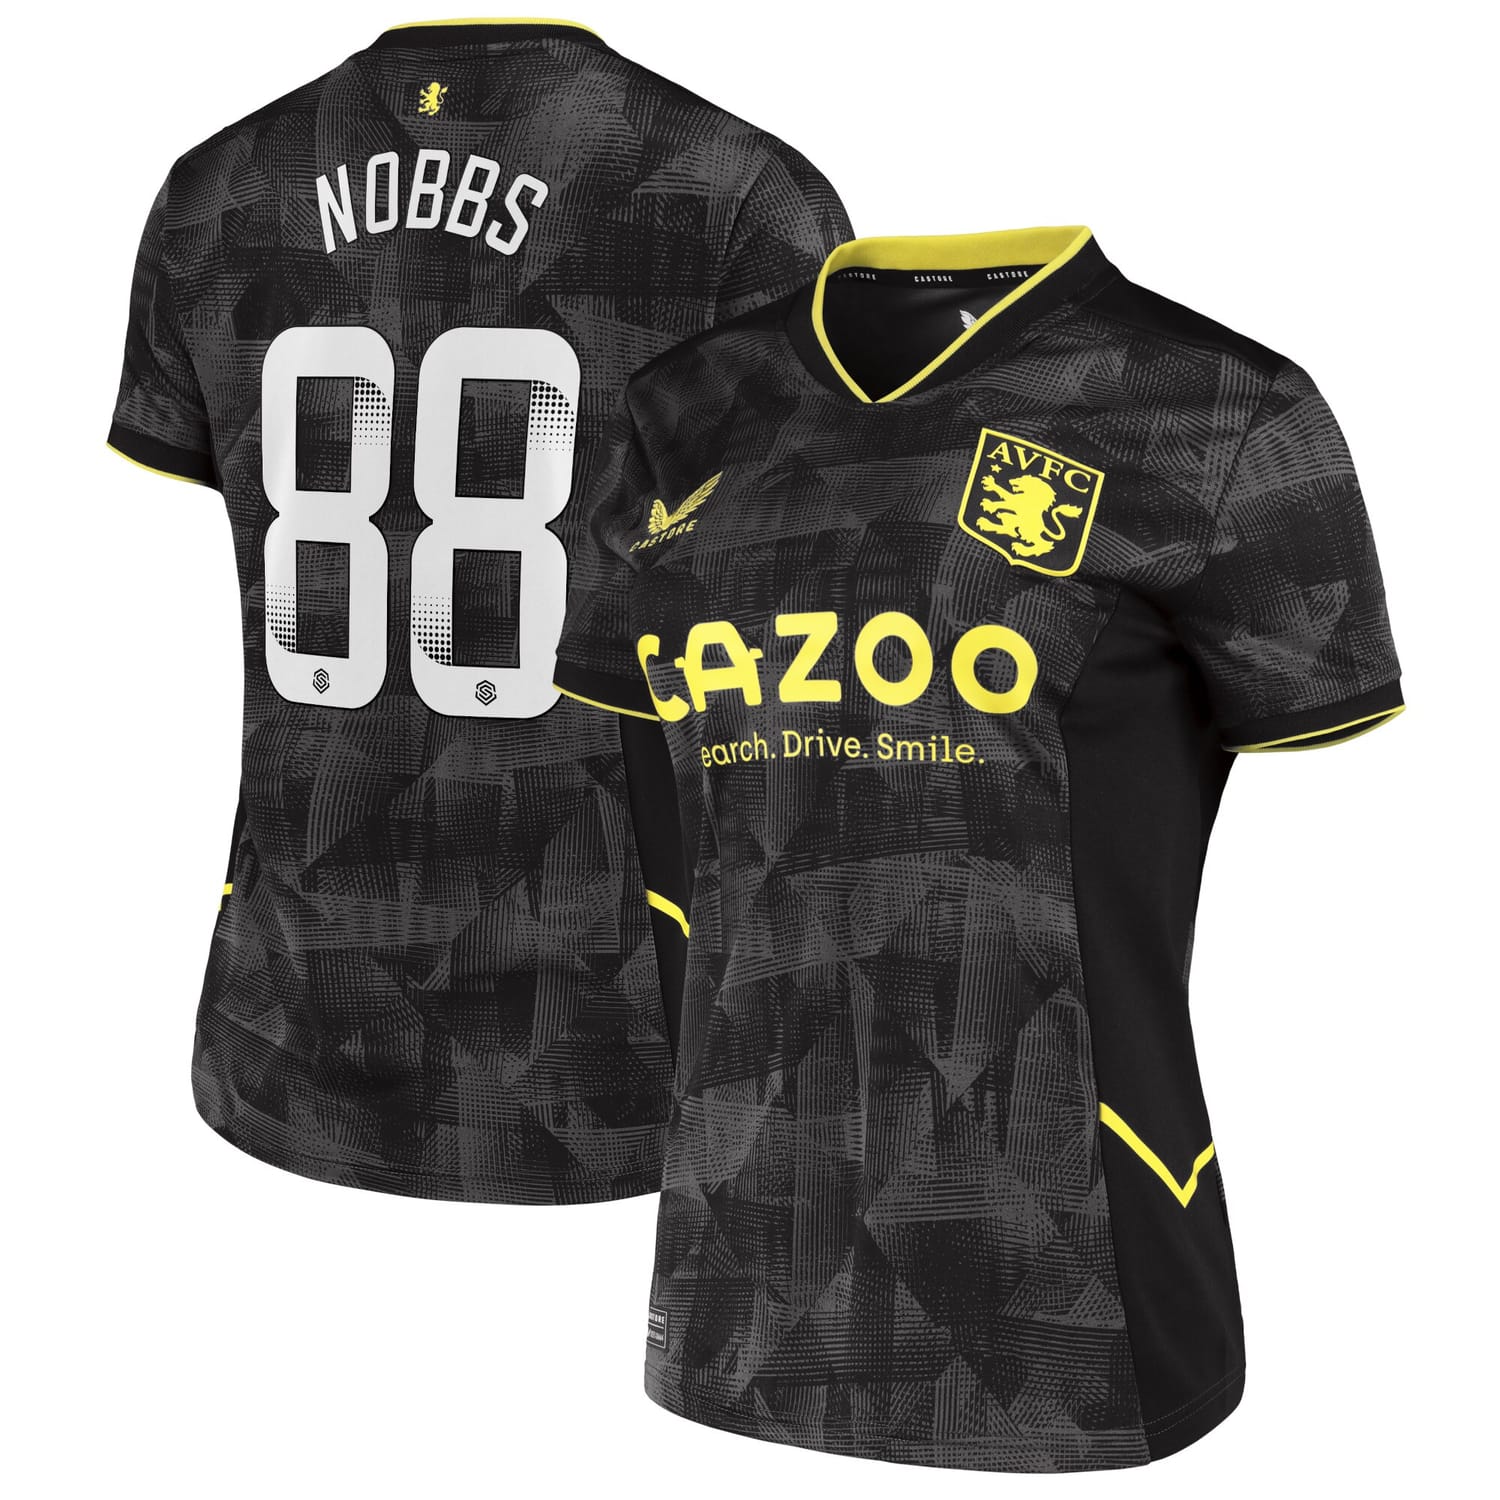 Premier League Aston Villa Third WSL Jersey Shirt 2022-23 player Jordan Nobbs 88 printing for Women